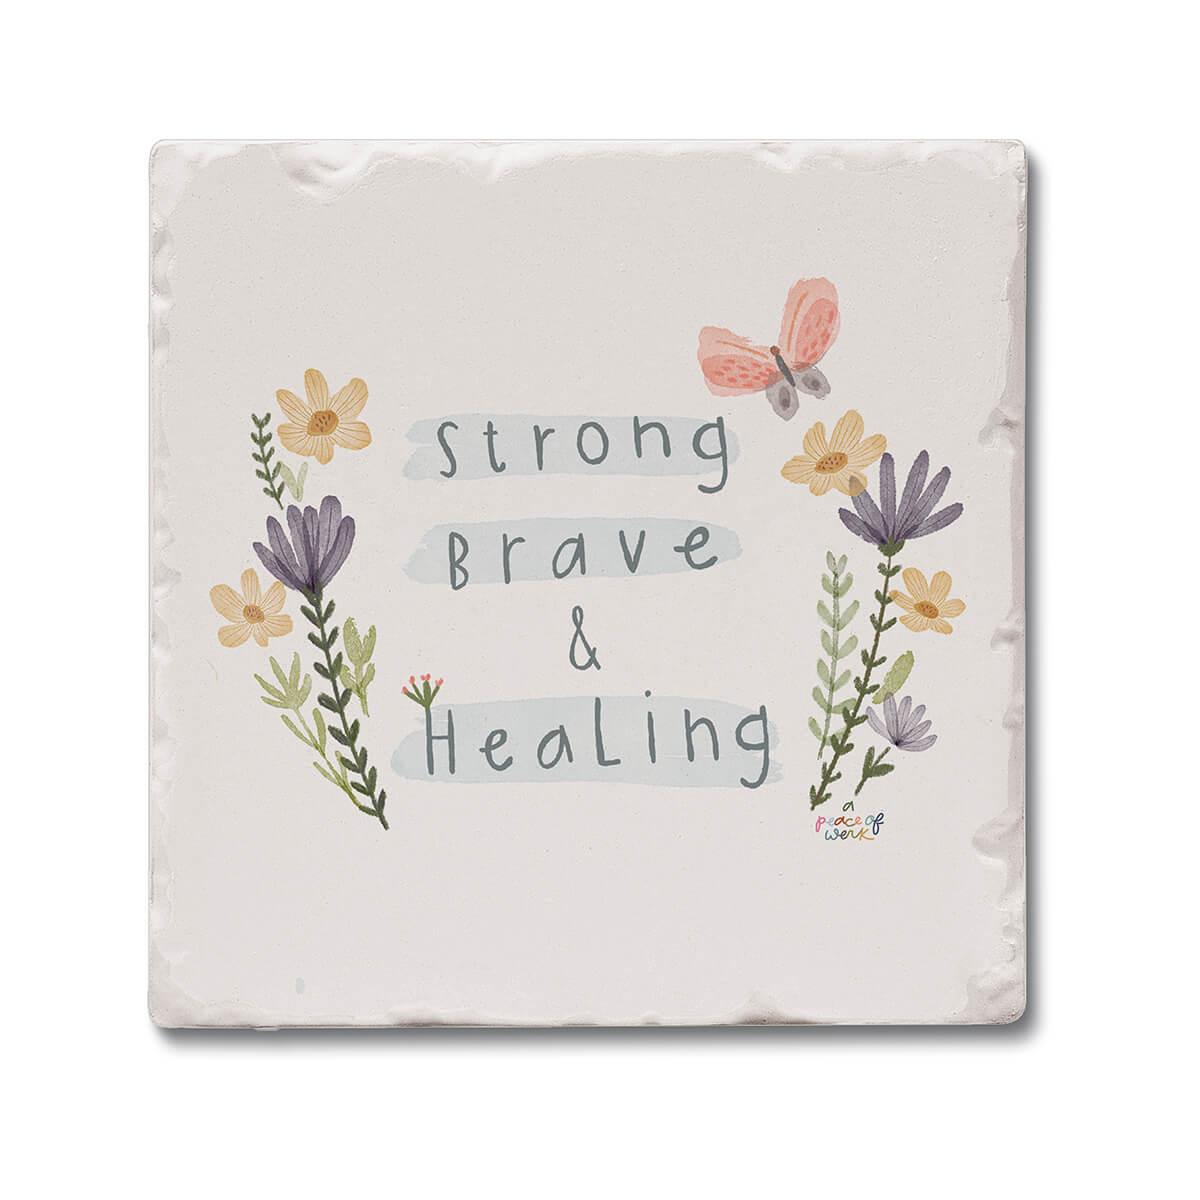  Strong & Brave Single Tile Coaster